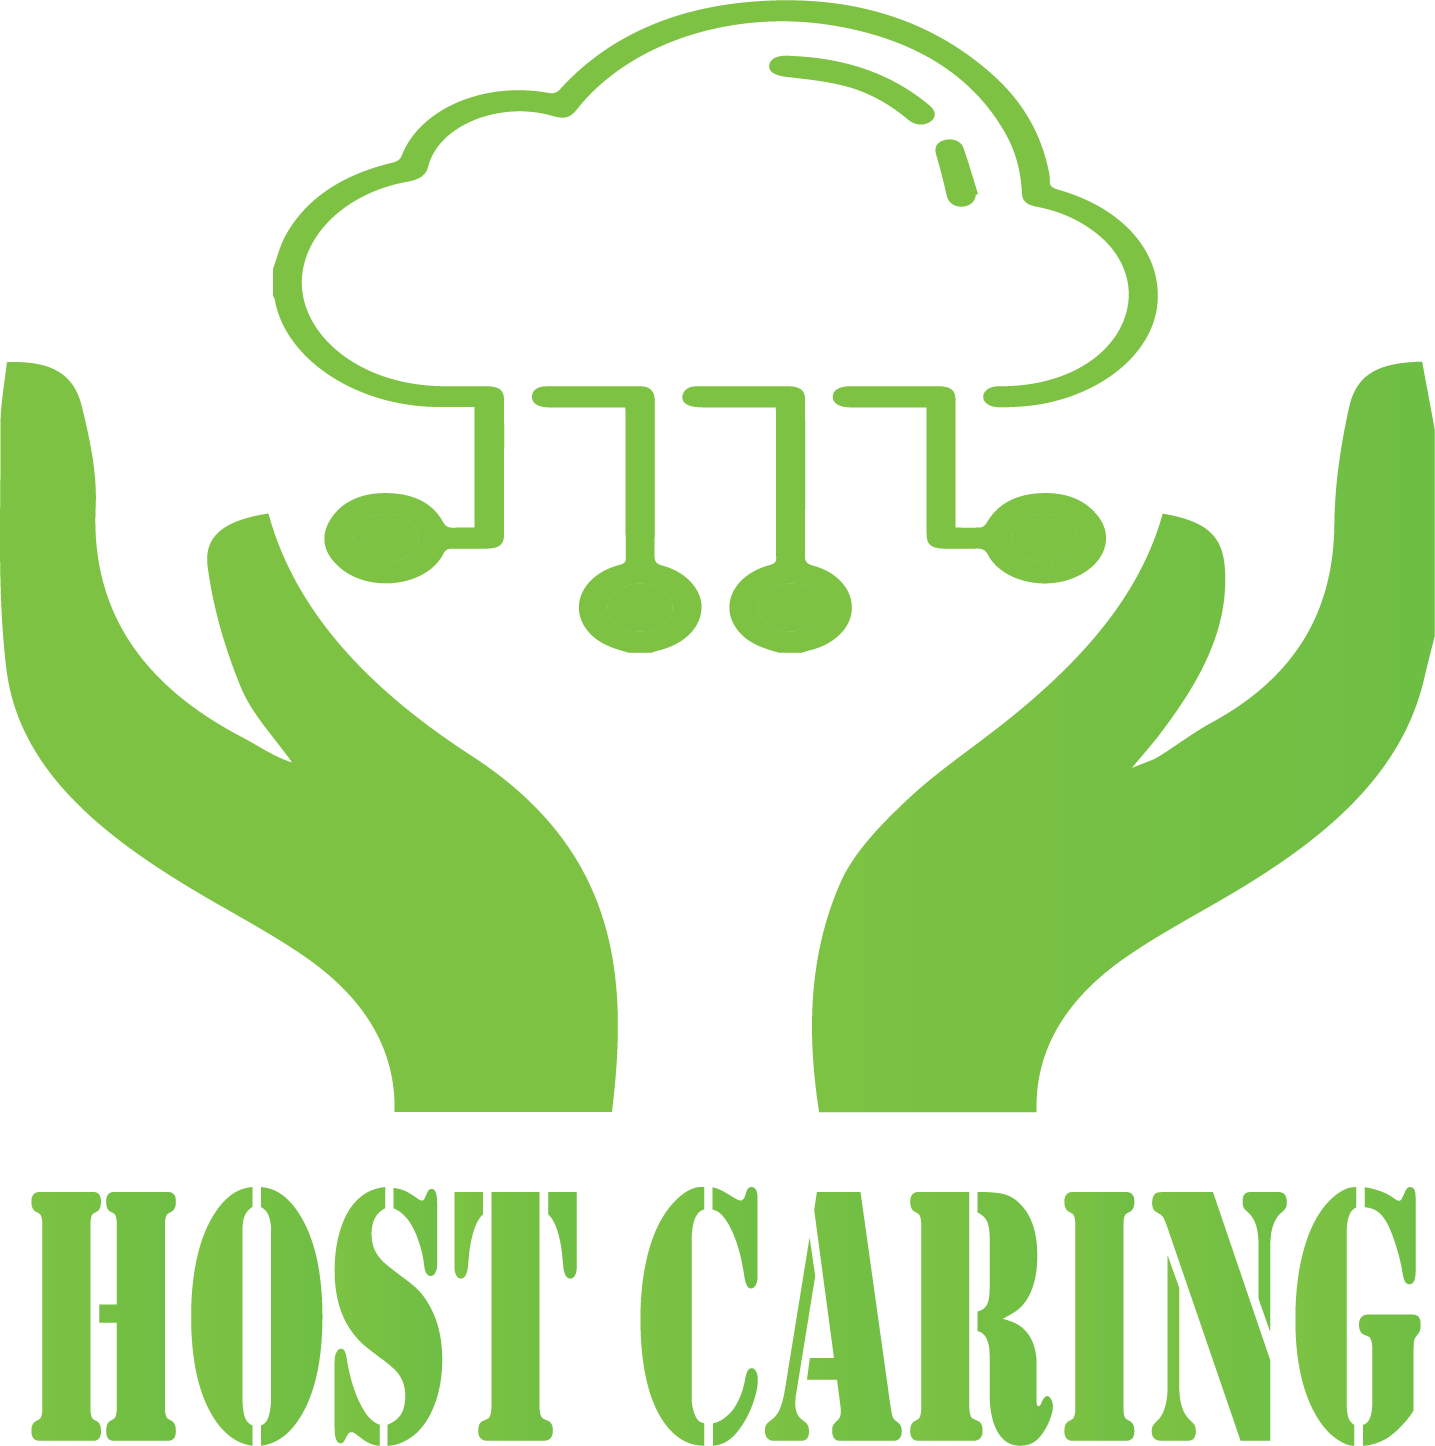 Host Caring